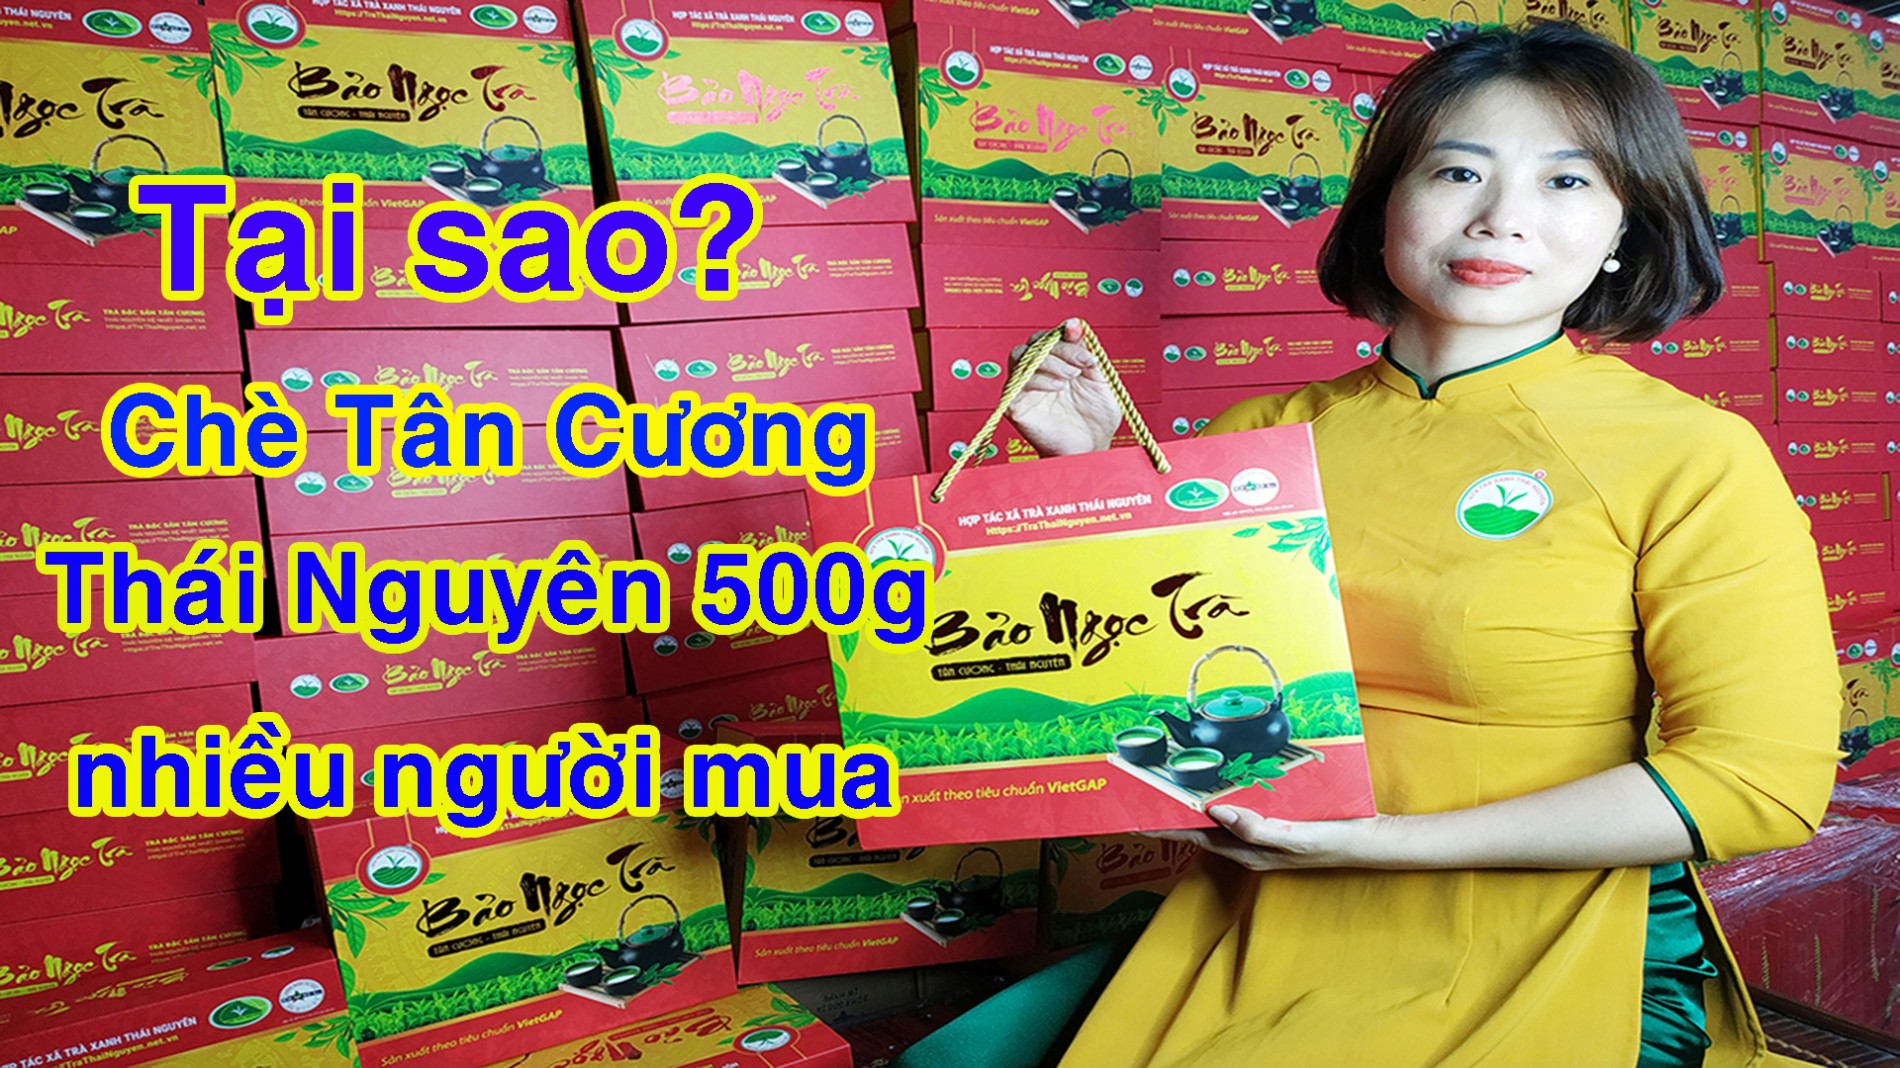 che-tan-cuong-thai-nguyen_500g